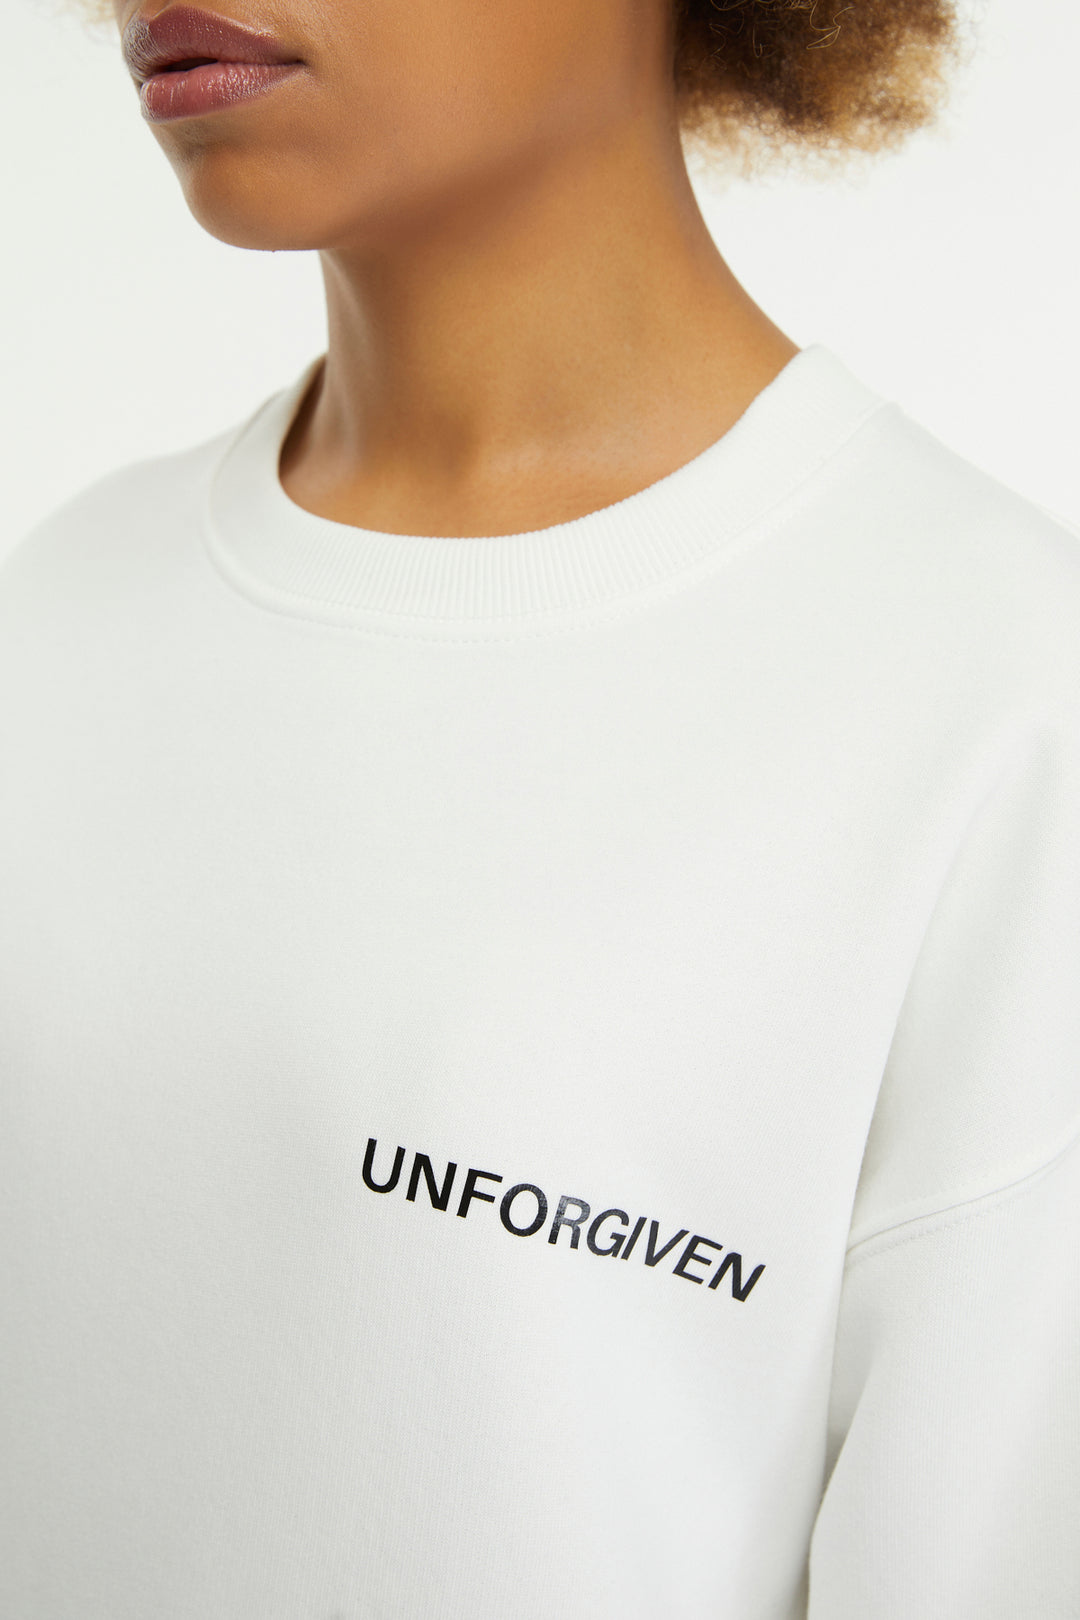 Unforgiven / Sweatshirt